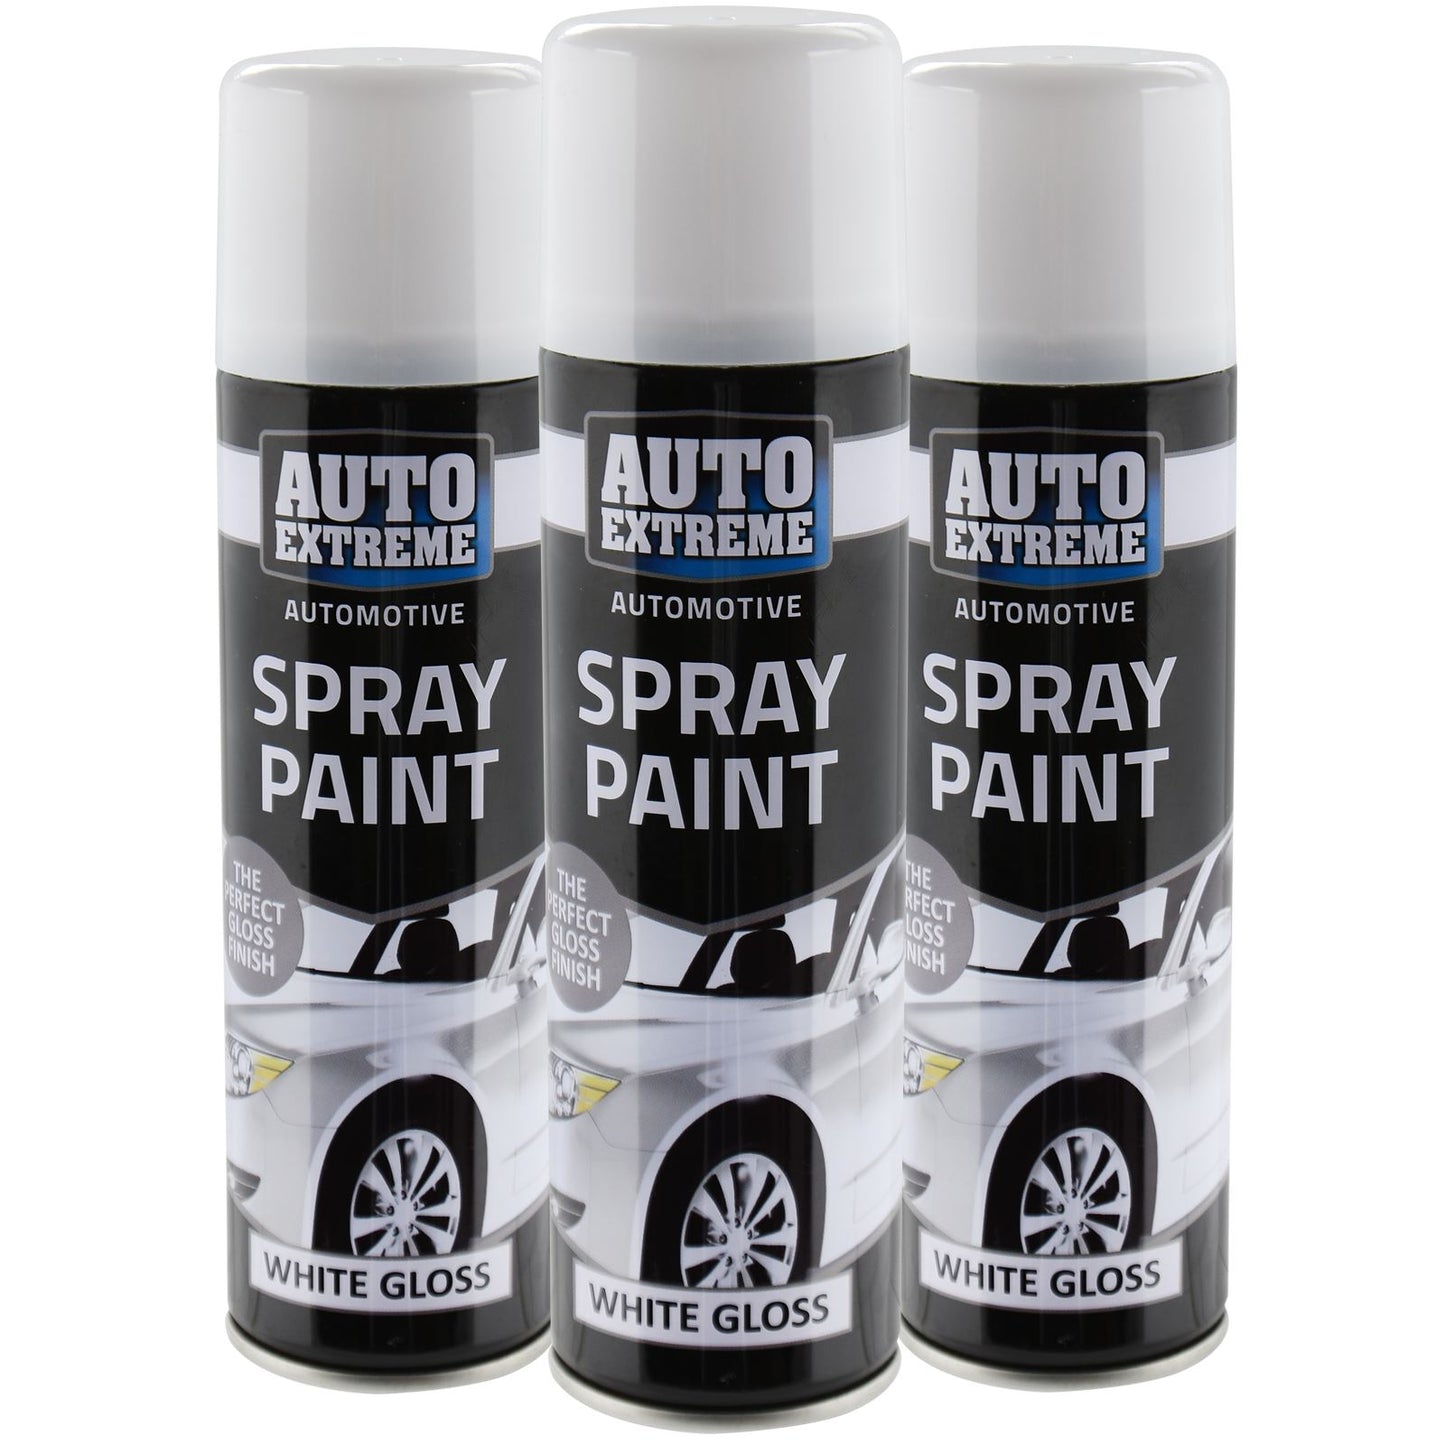 White Gloss Automotive Spray Paint